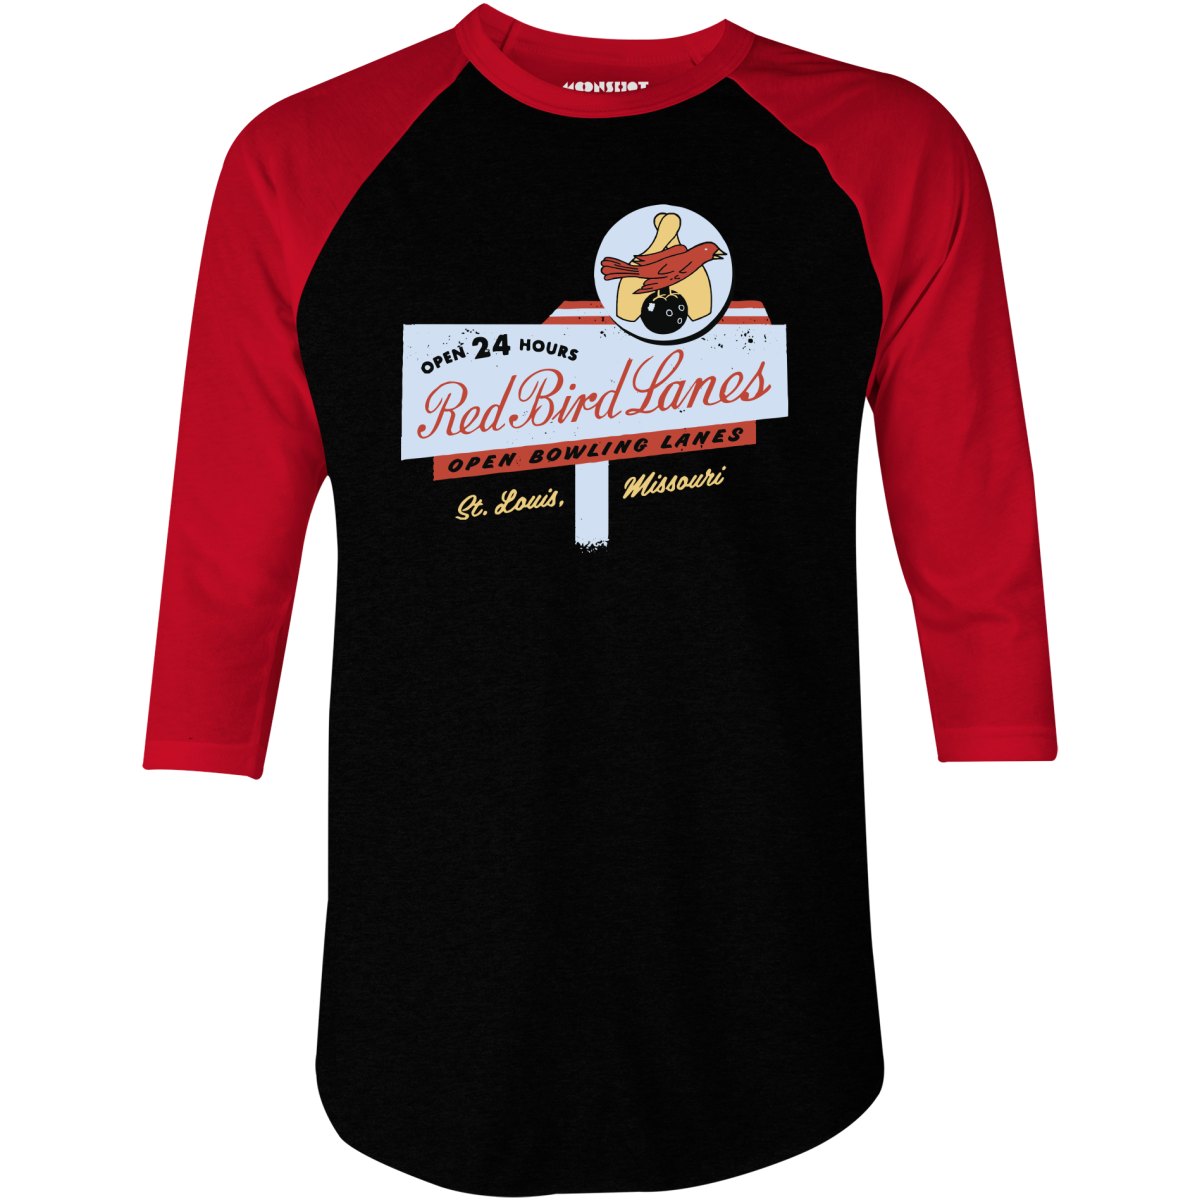 Red Bird Lanes v2 - St. Louis, MO - Vintage Bowling Alley - 3/4 Sleeve Raglan T-Shirt